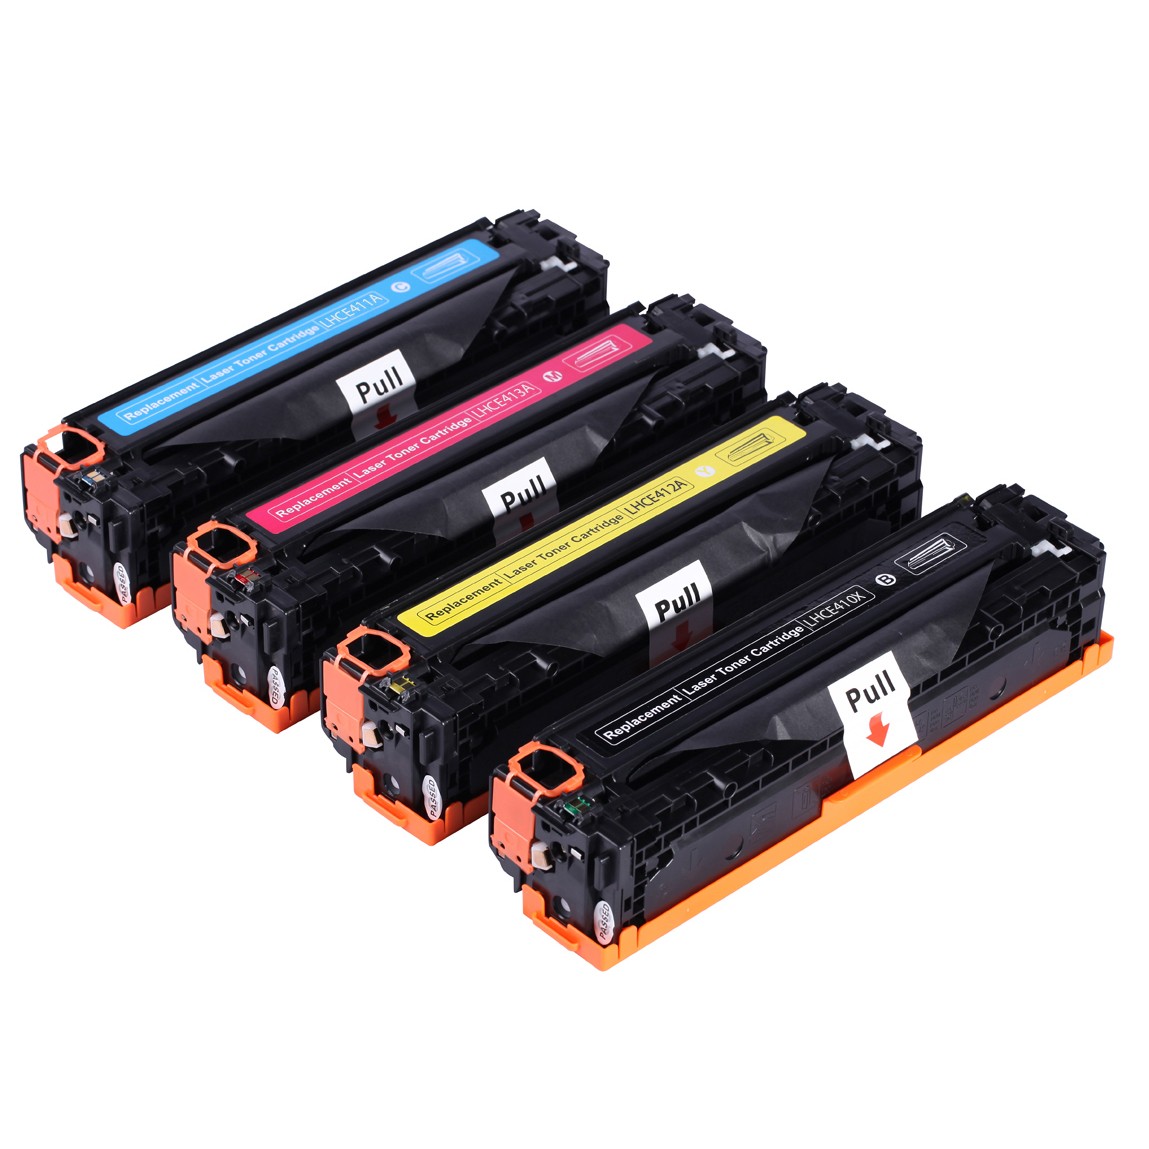 Compatible toner cartridges for HP CE410X-CE413A